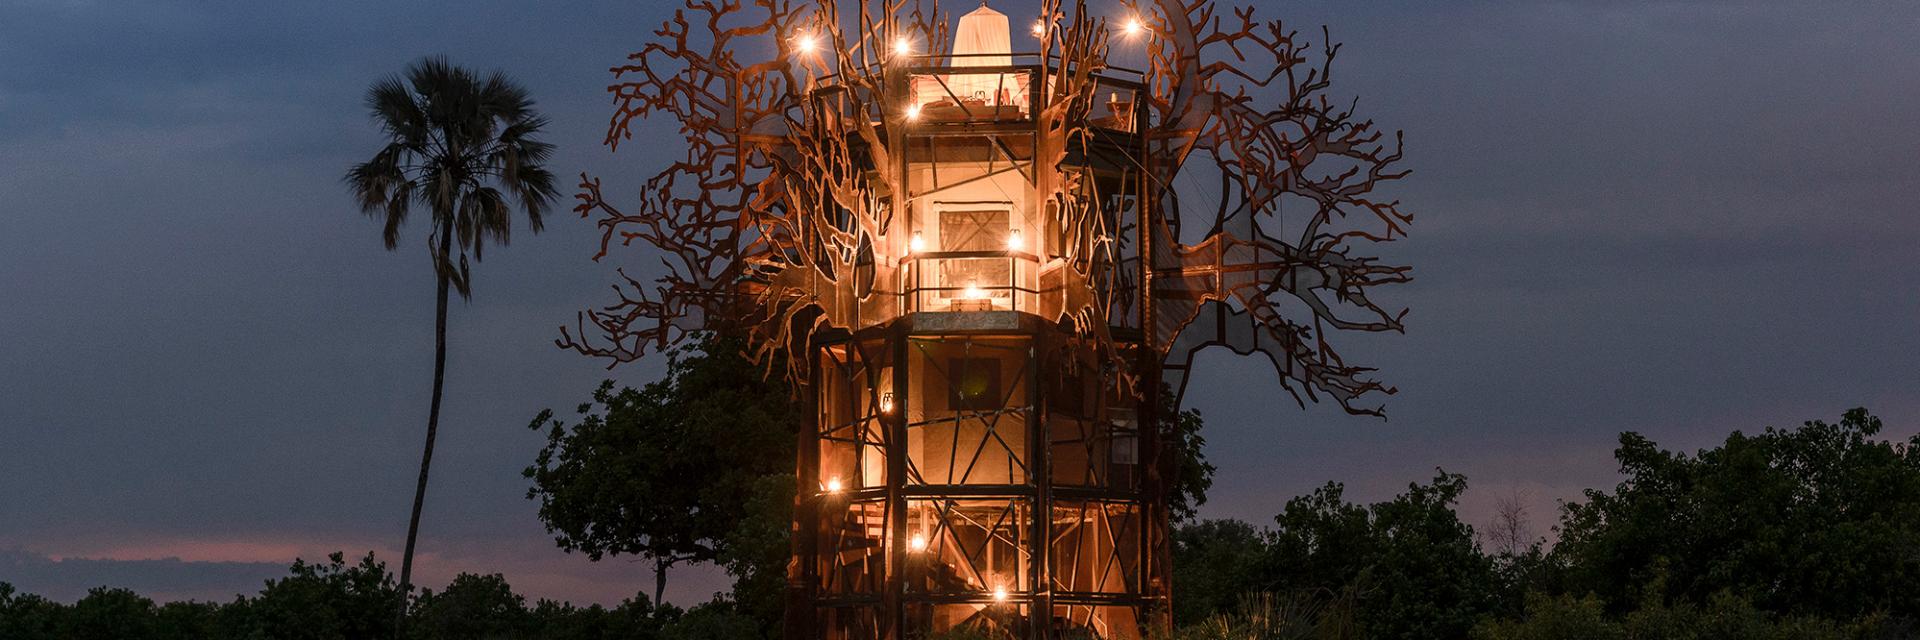 The Baobab tree house at night.